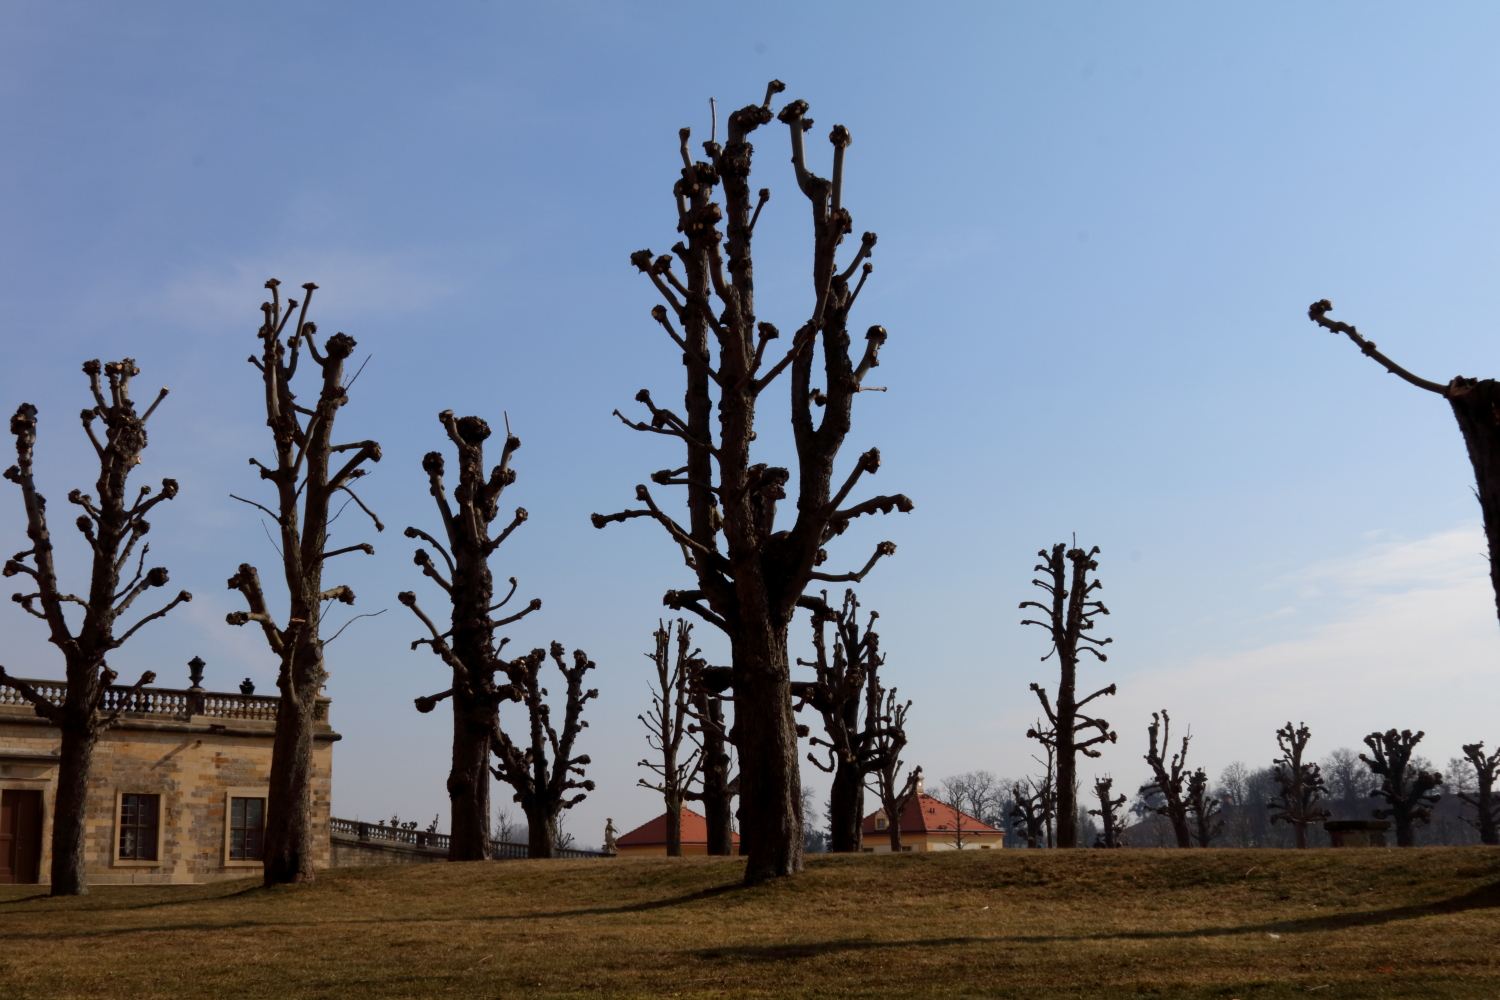 #SchlossMoritzburg #Bäume #blauerHimmel